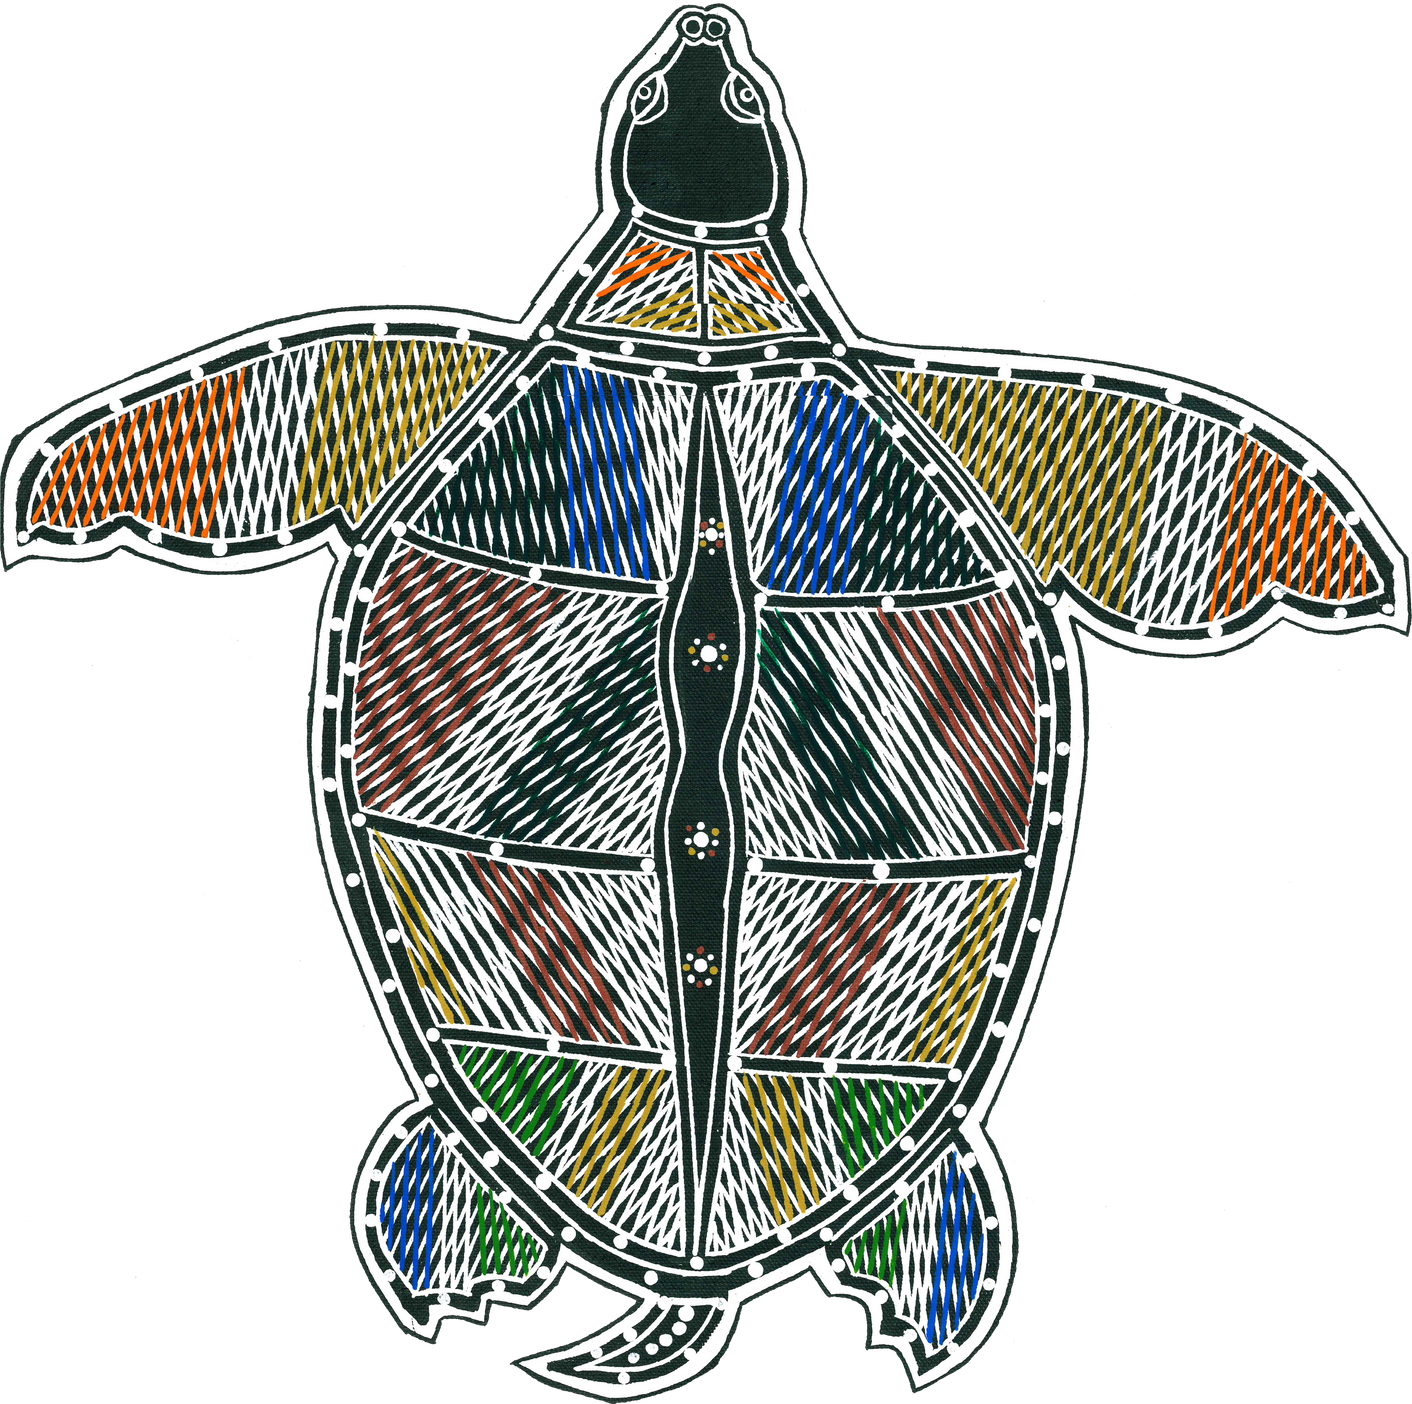 Australian Aboriginal Painting of a Turtle